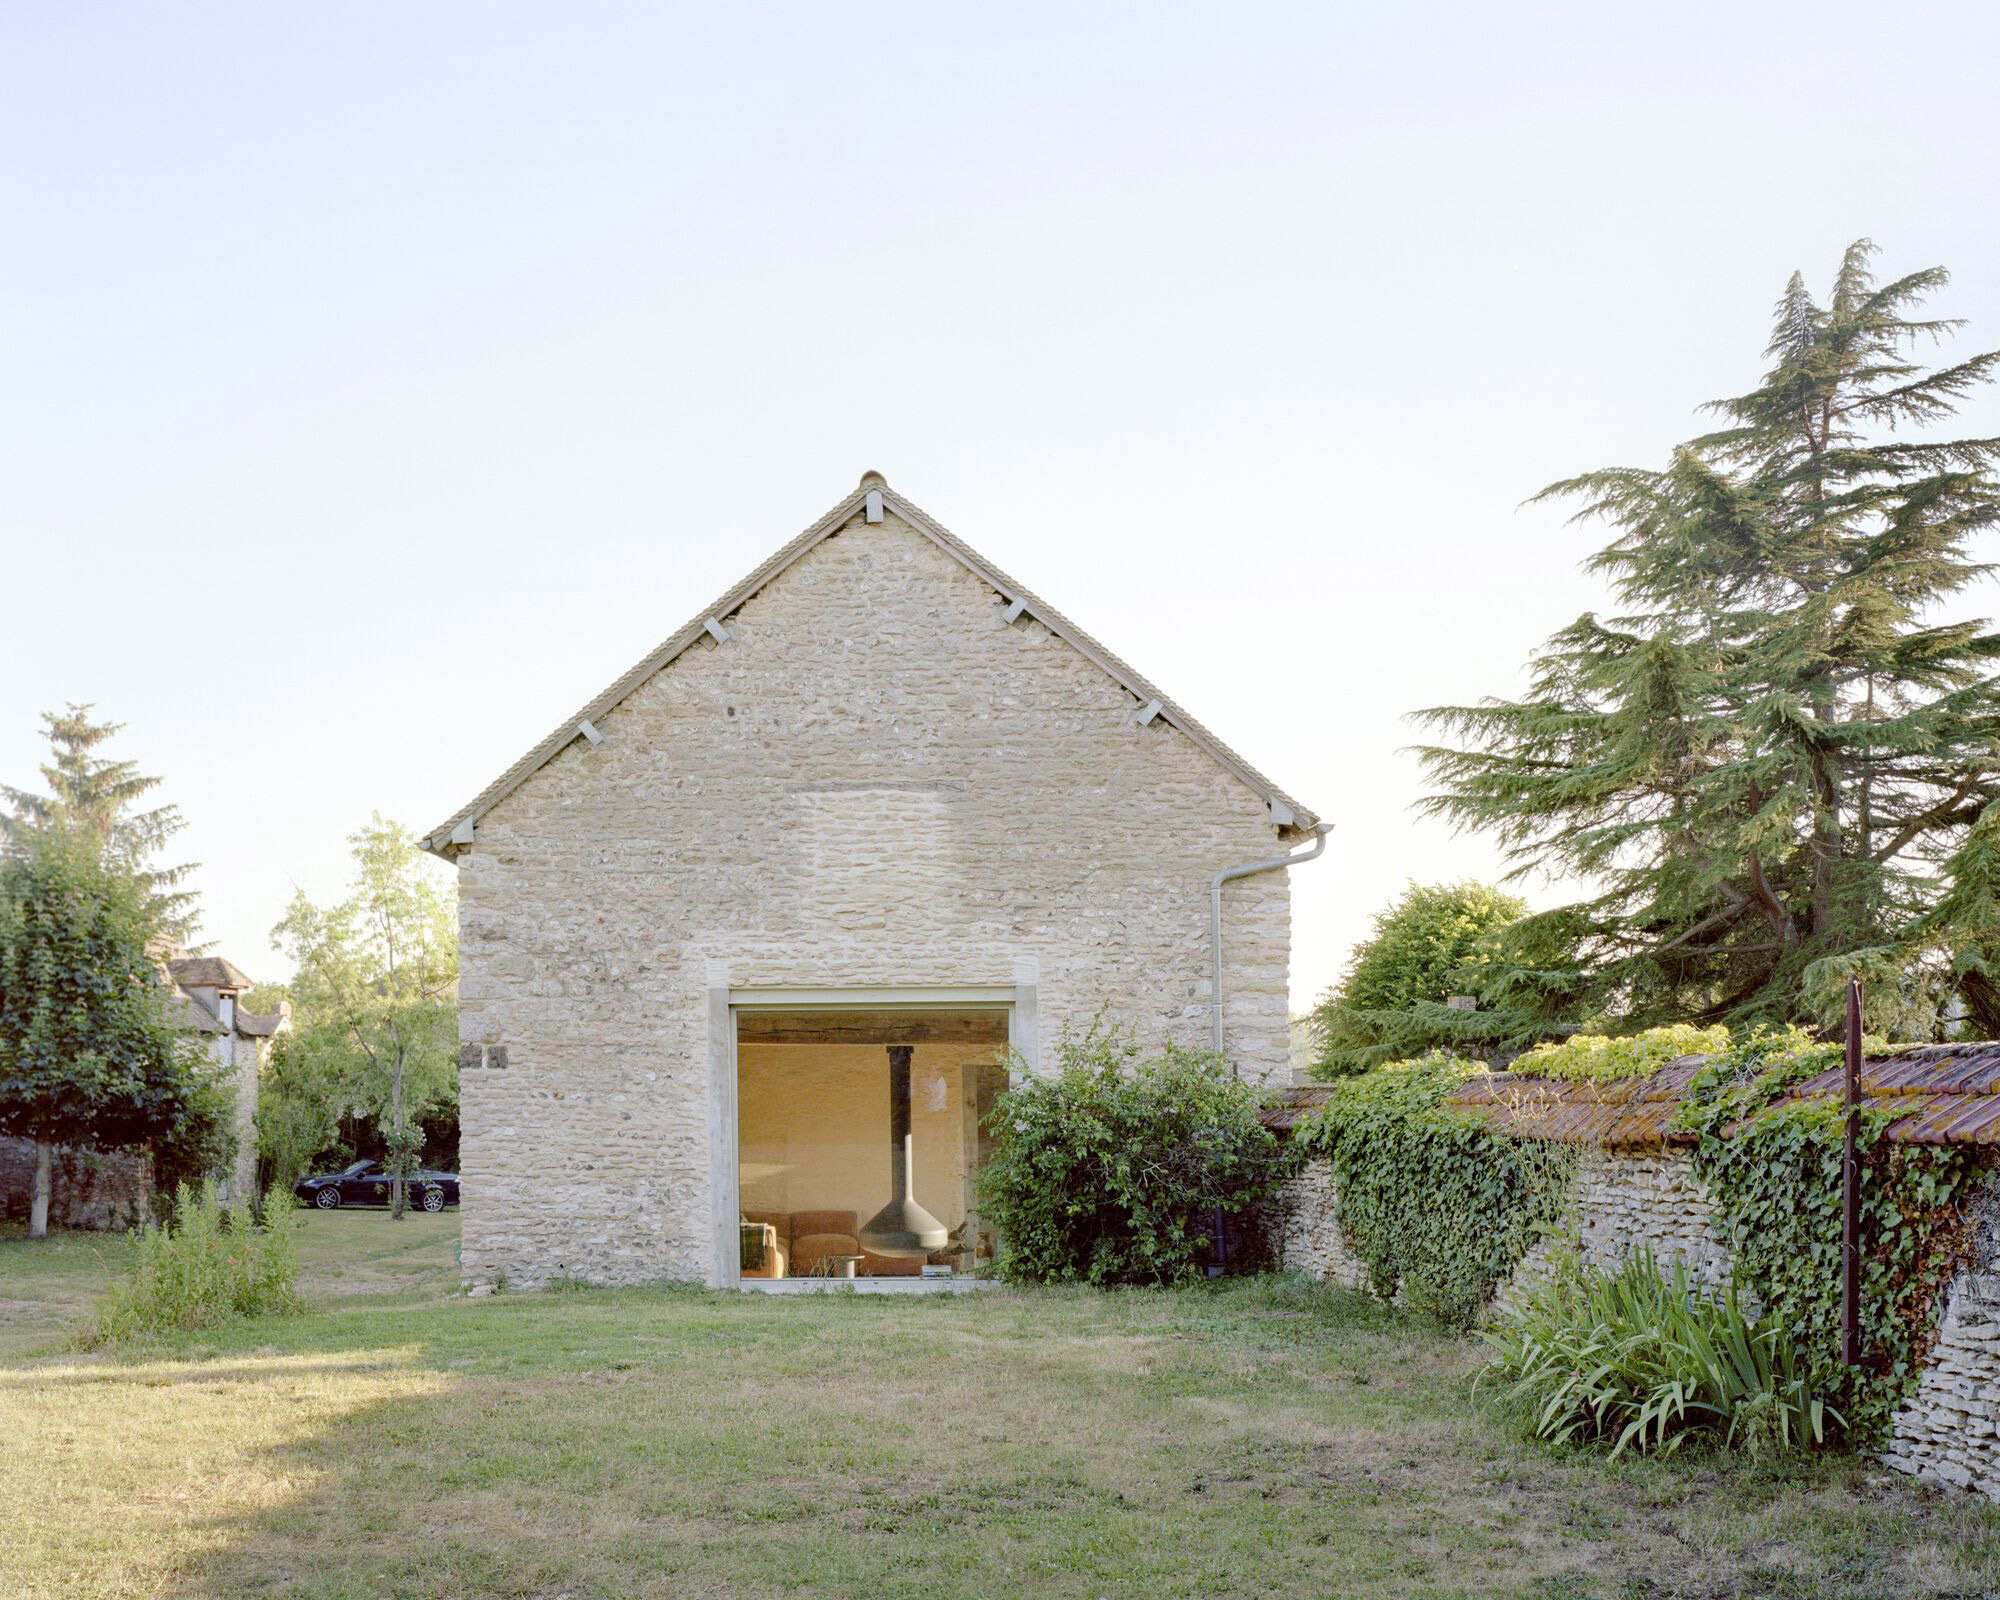 Hécourt Farmhouse - Gessato